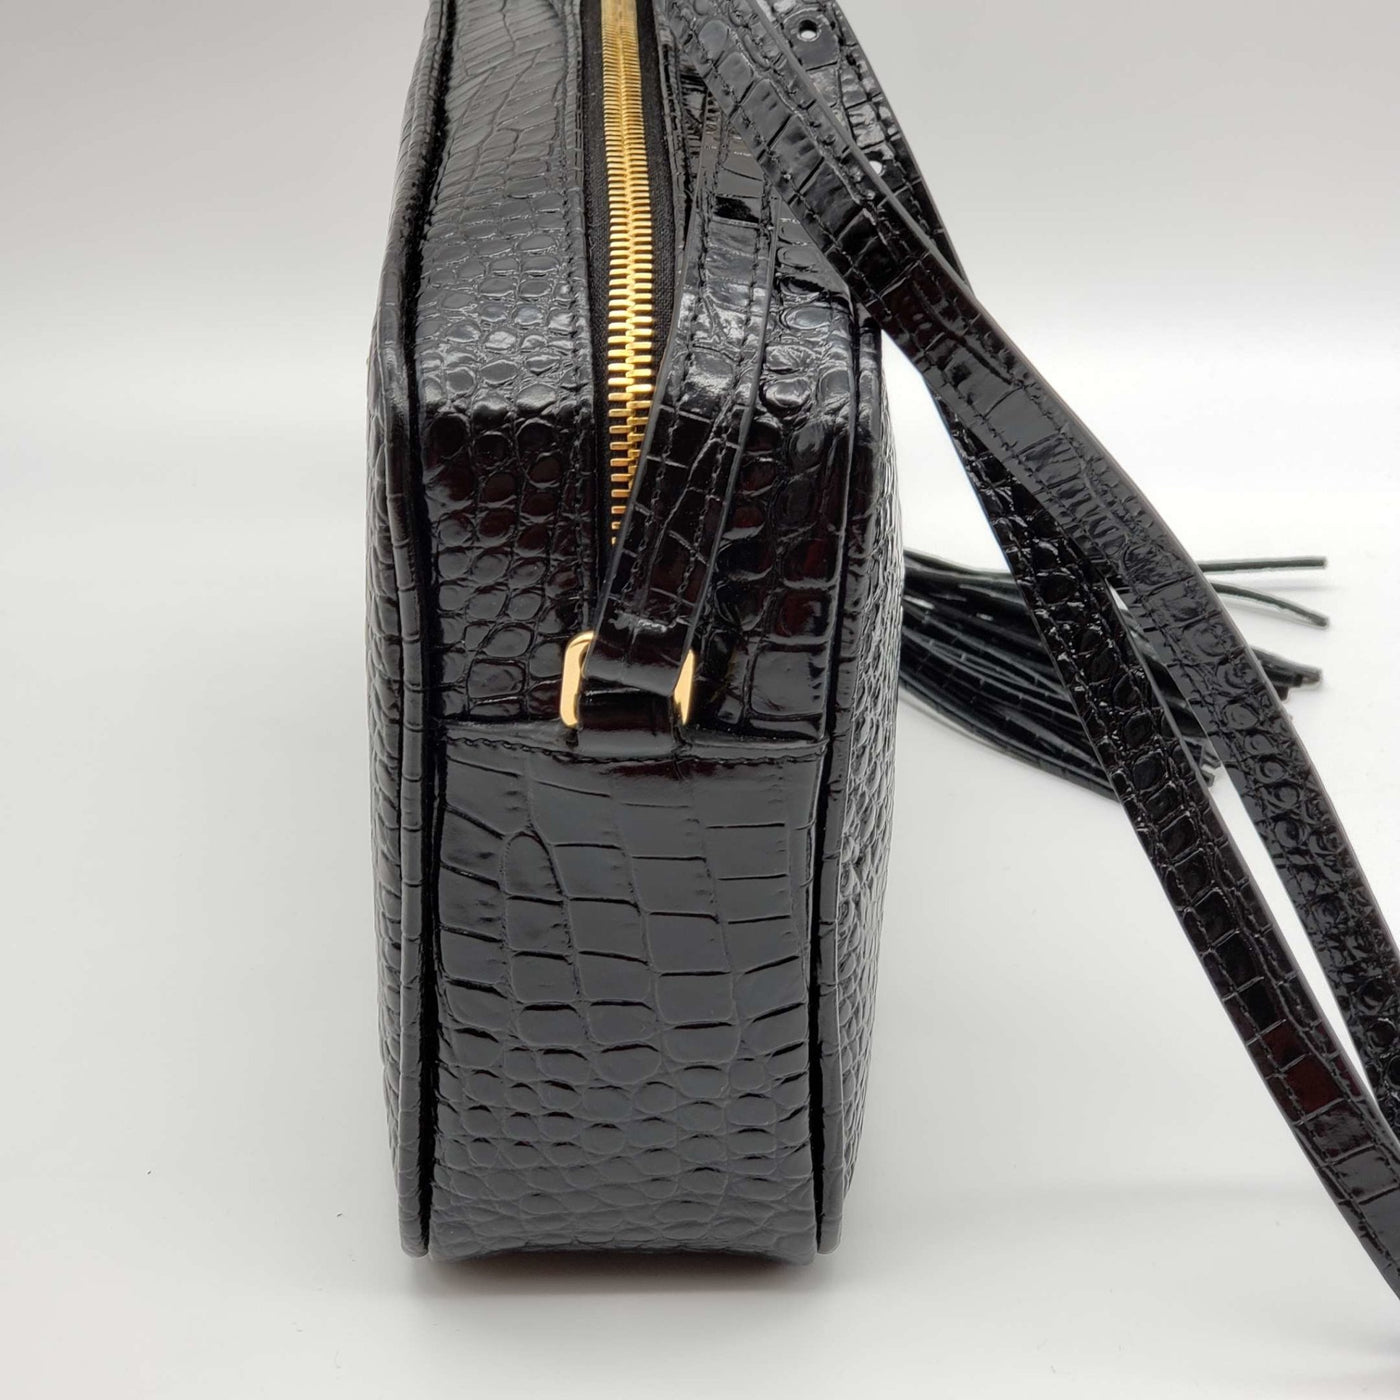 Luxury Cheaper- Shop Our Latest Louis Vuitton & Gucci Bag Collection!